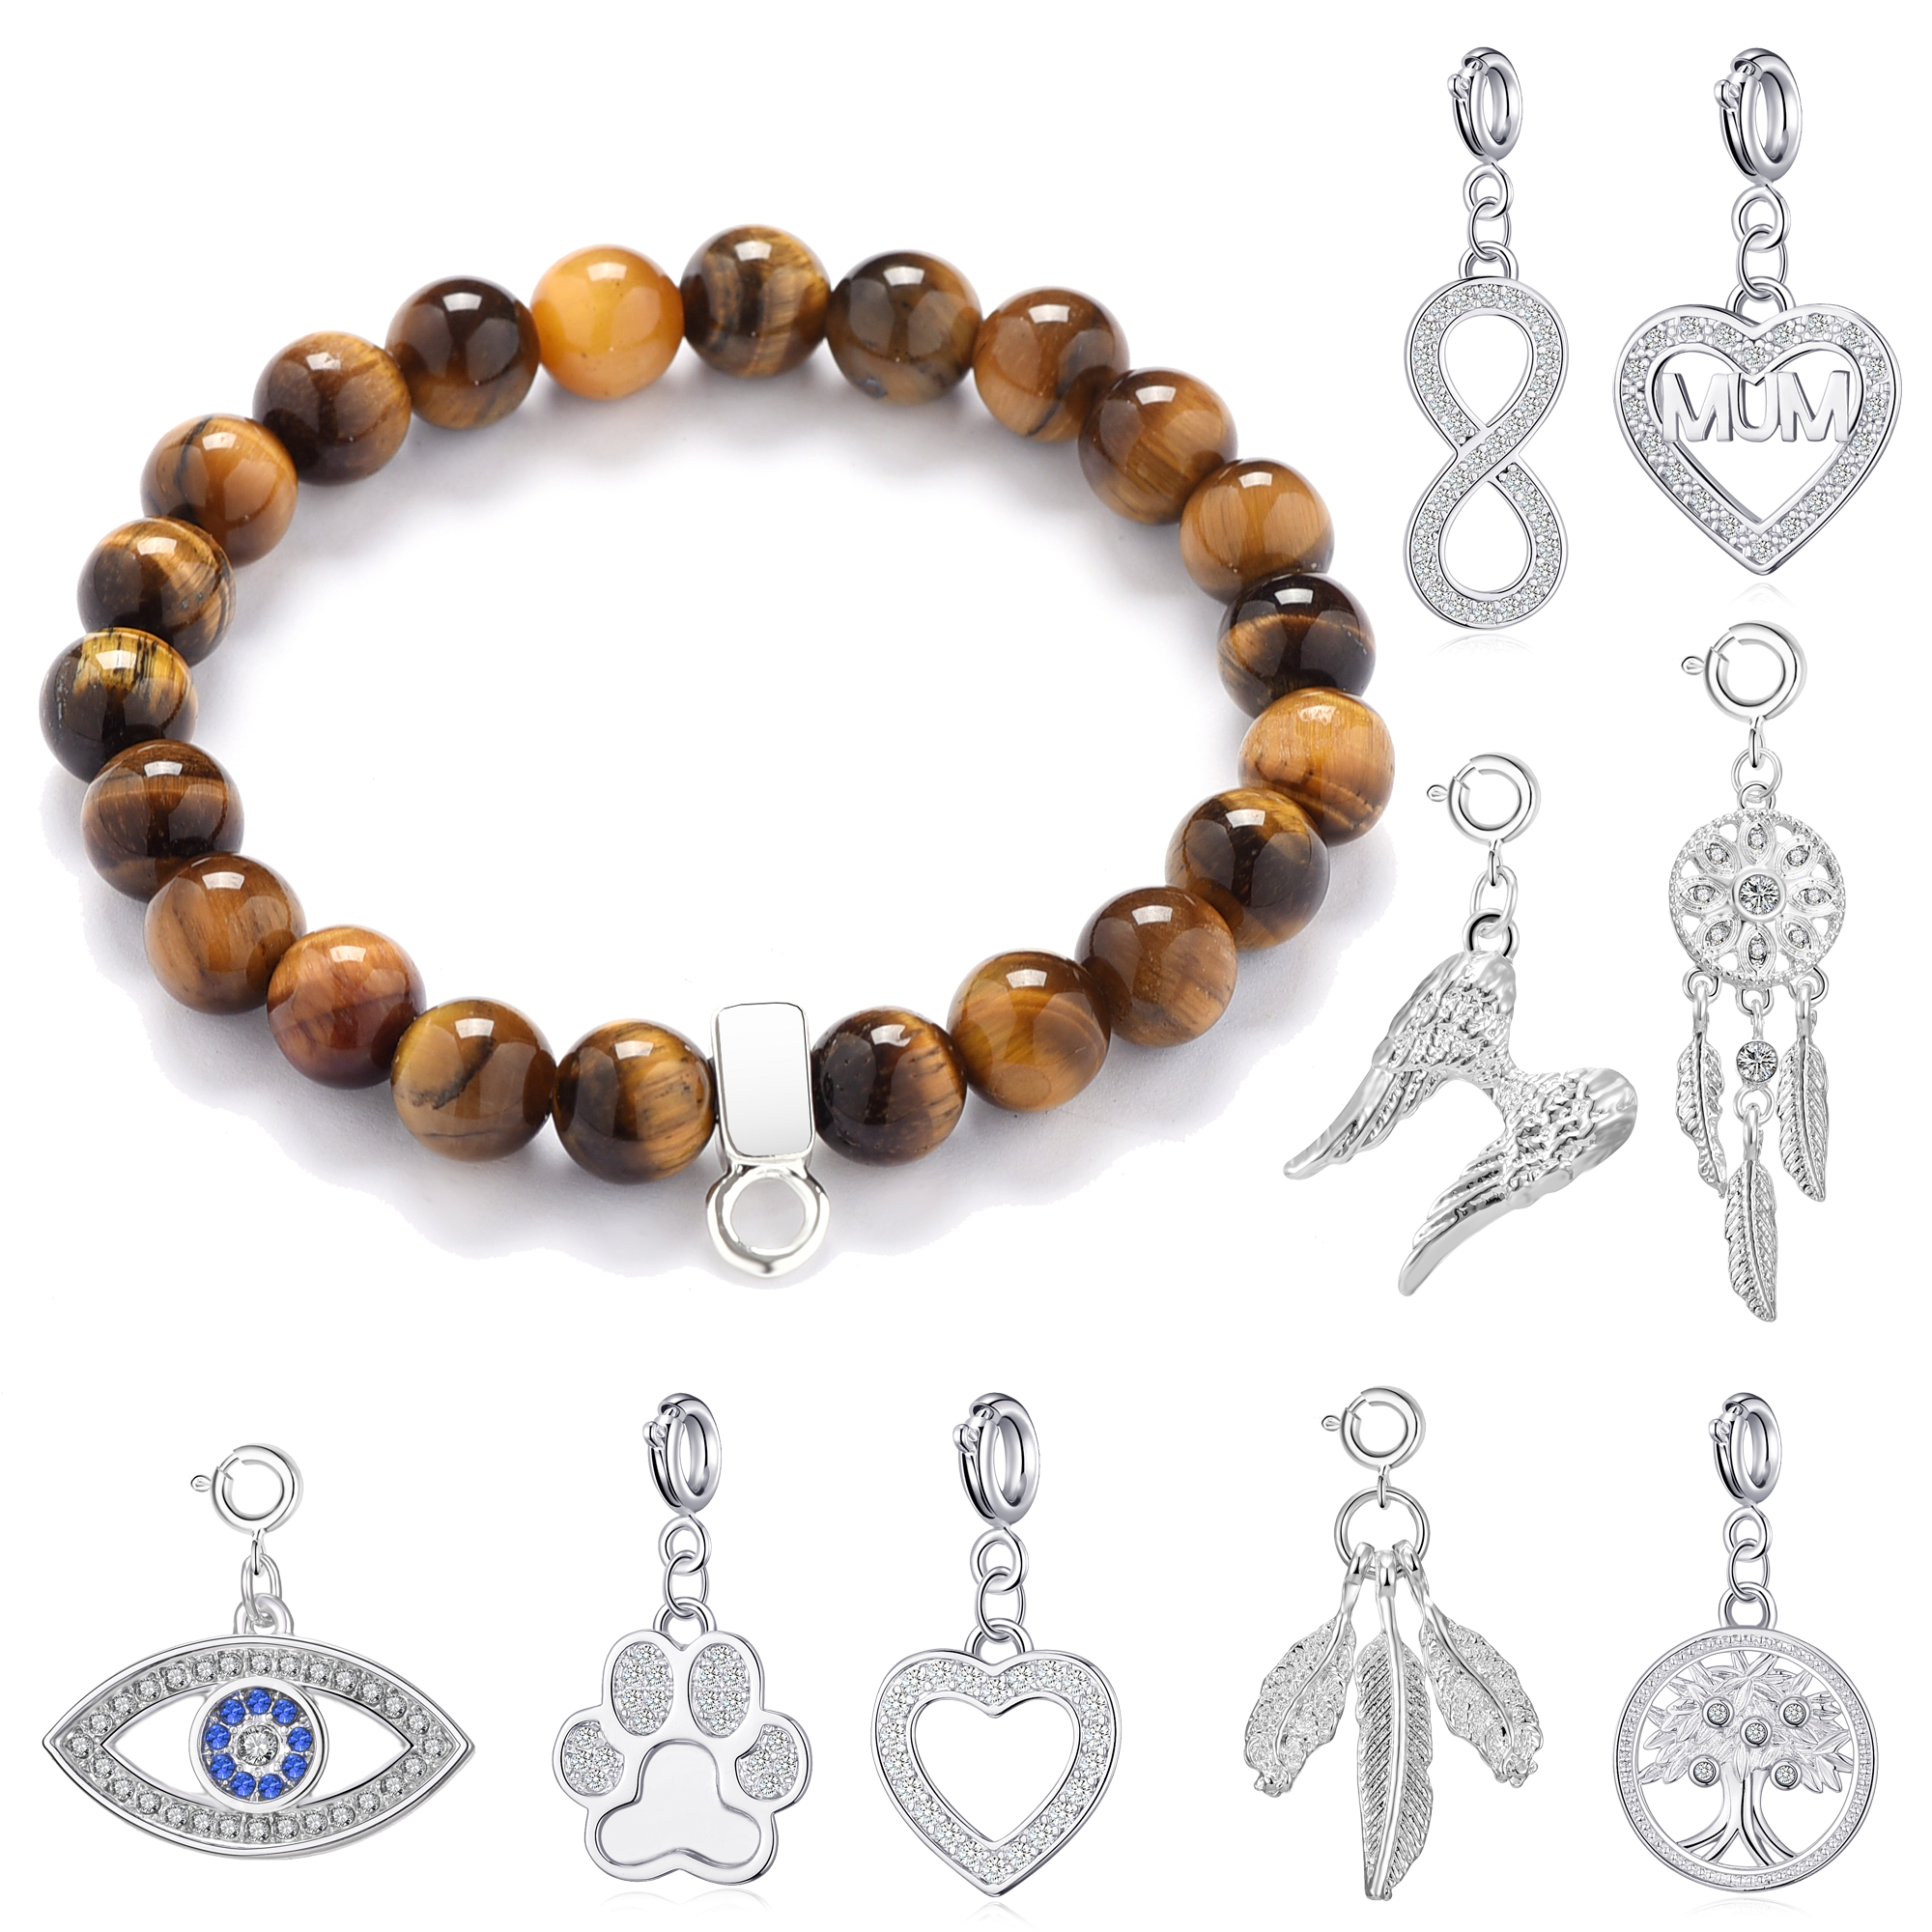 Tiger's Eye Gemstone Charm Stretch Bracelet with Charm Created with Zircondia® Crystals by Philip Jones Jewellery